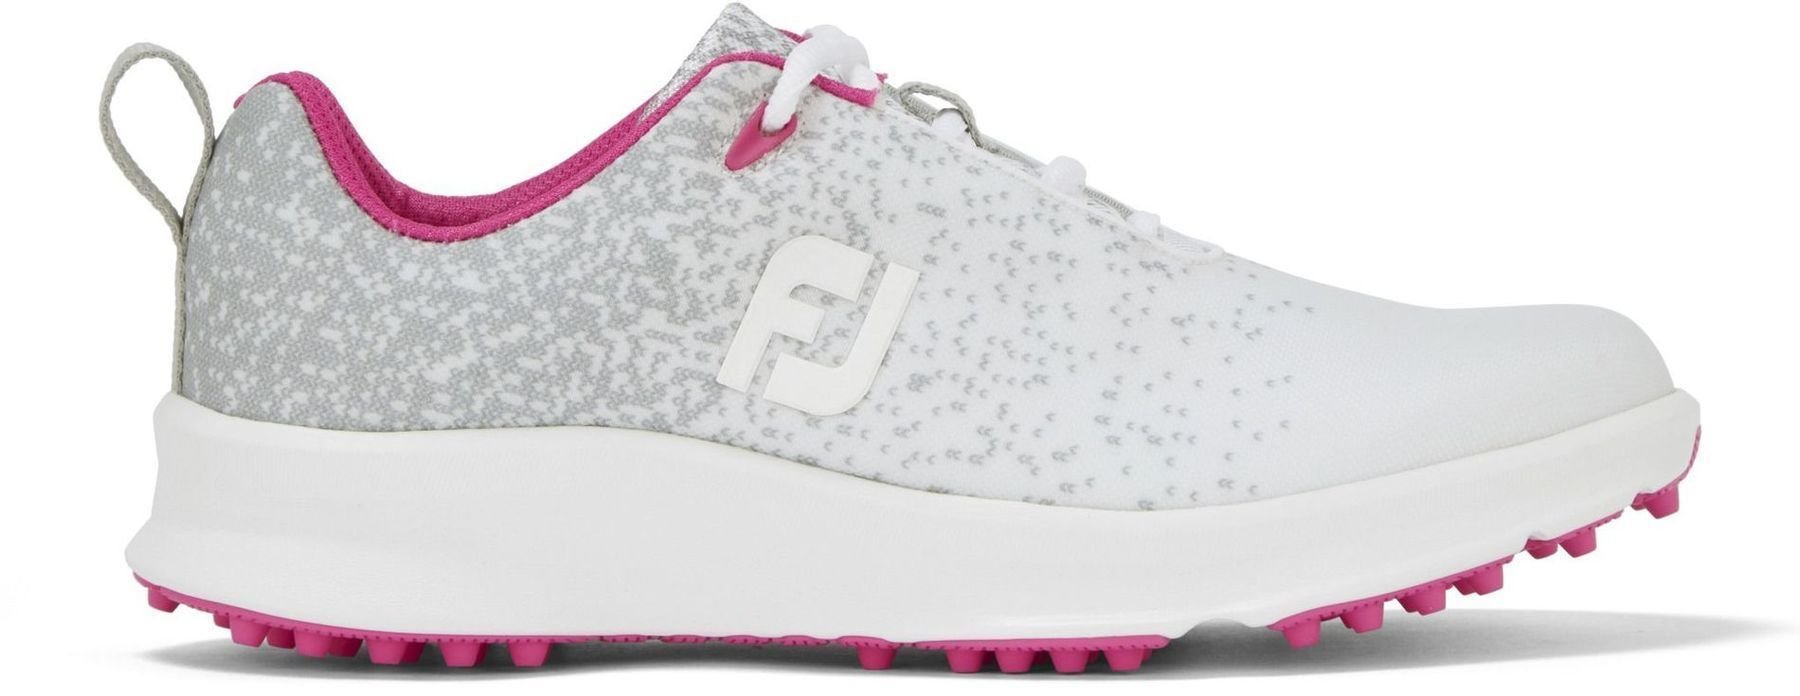 Damen Golfschuhe Footjoy Leisure Silver/White/Fuchsia 39